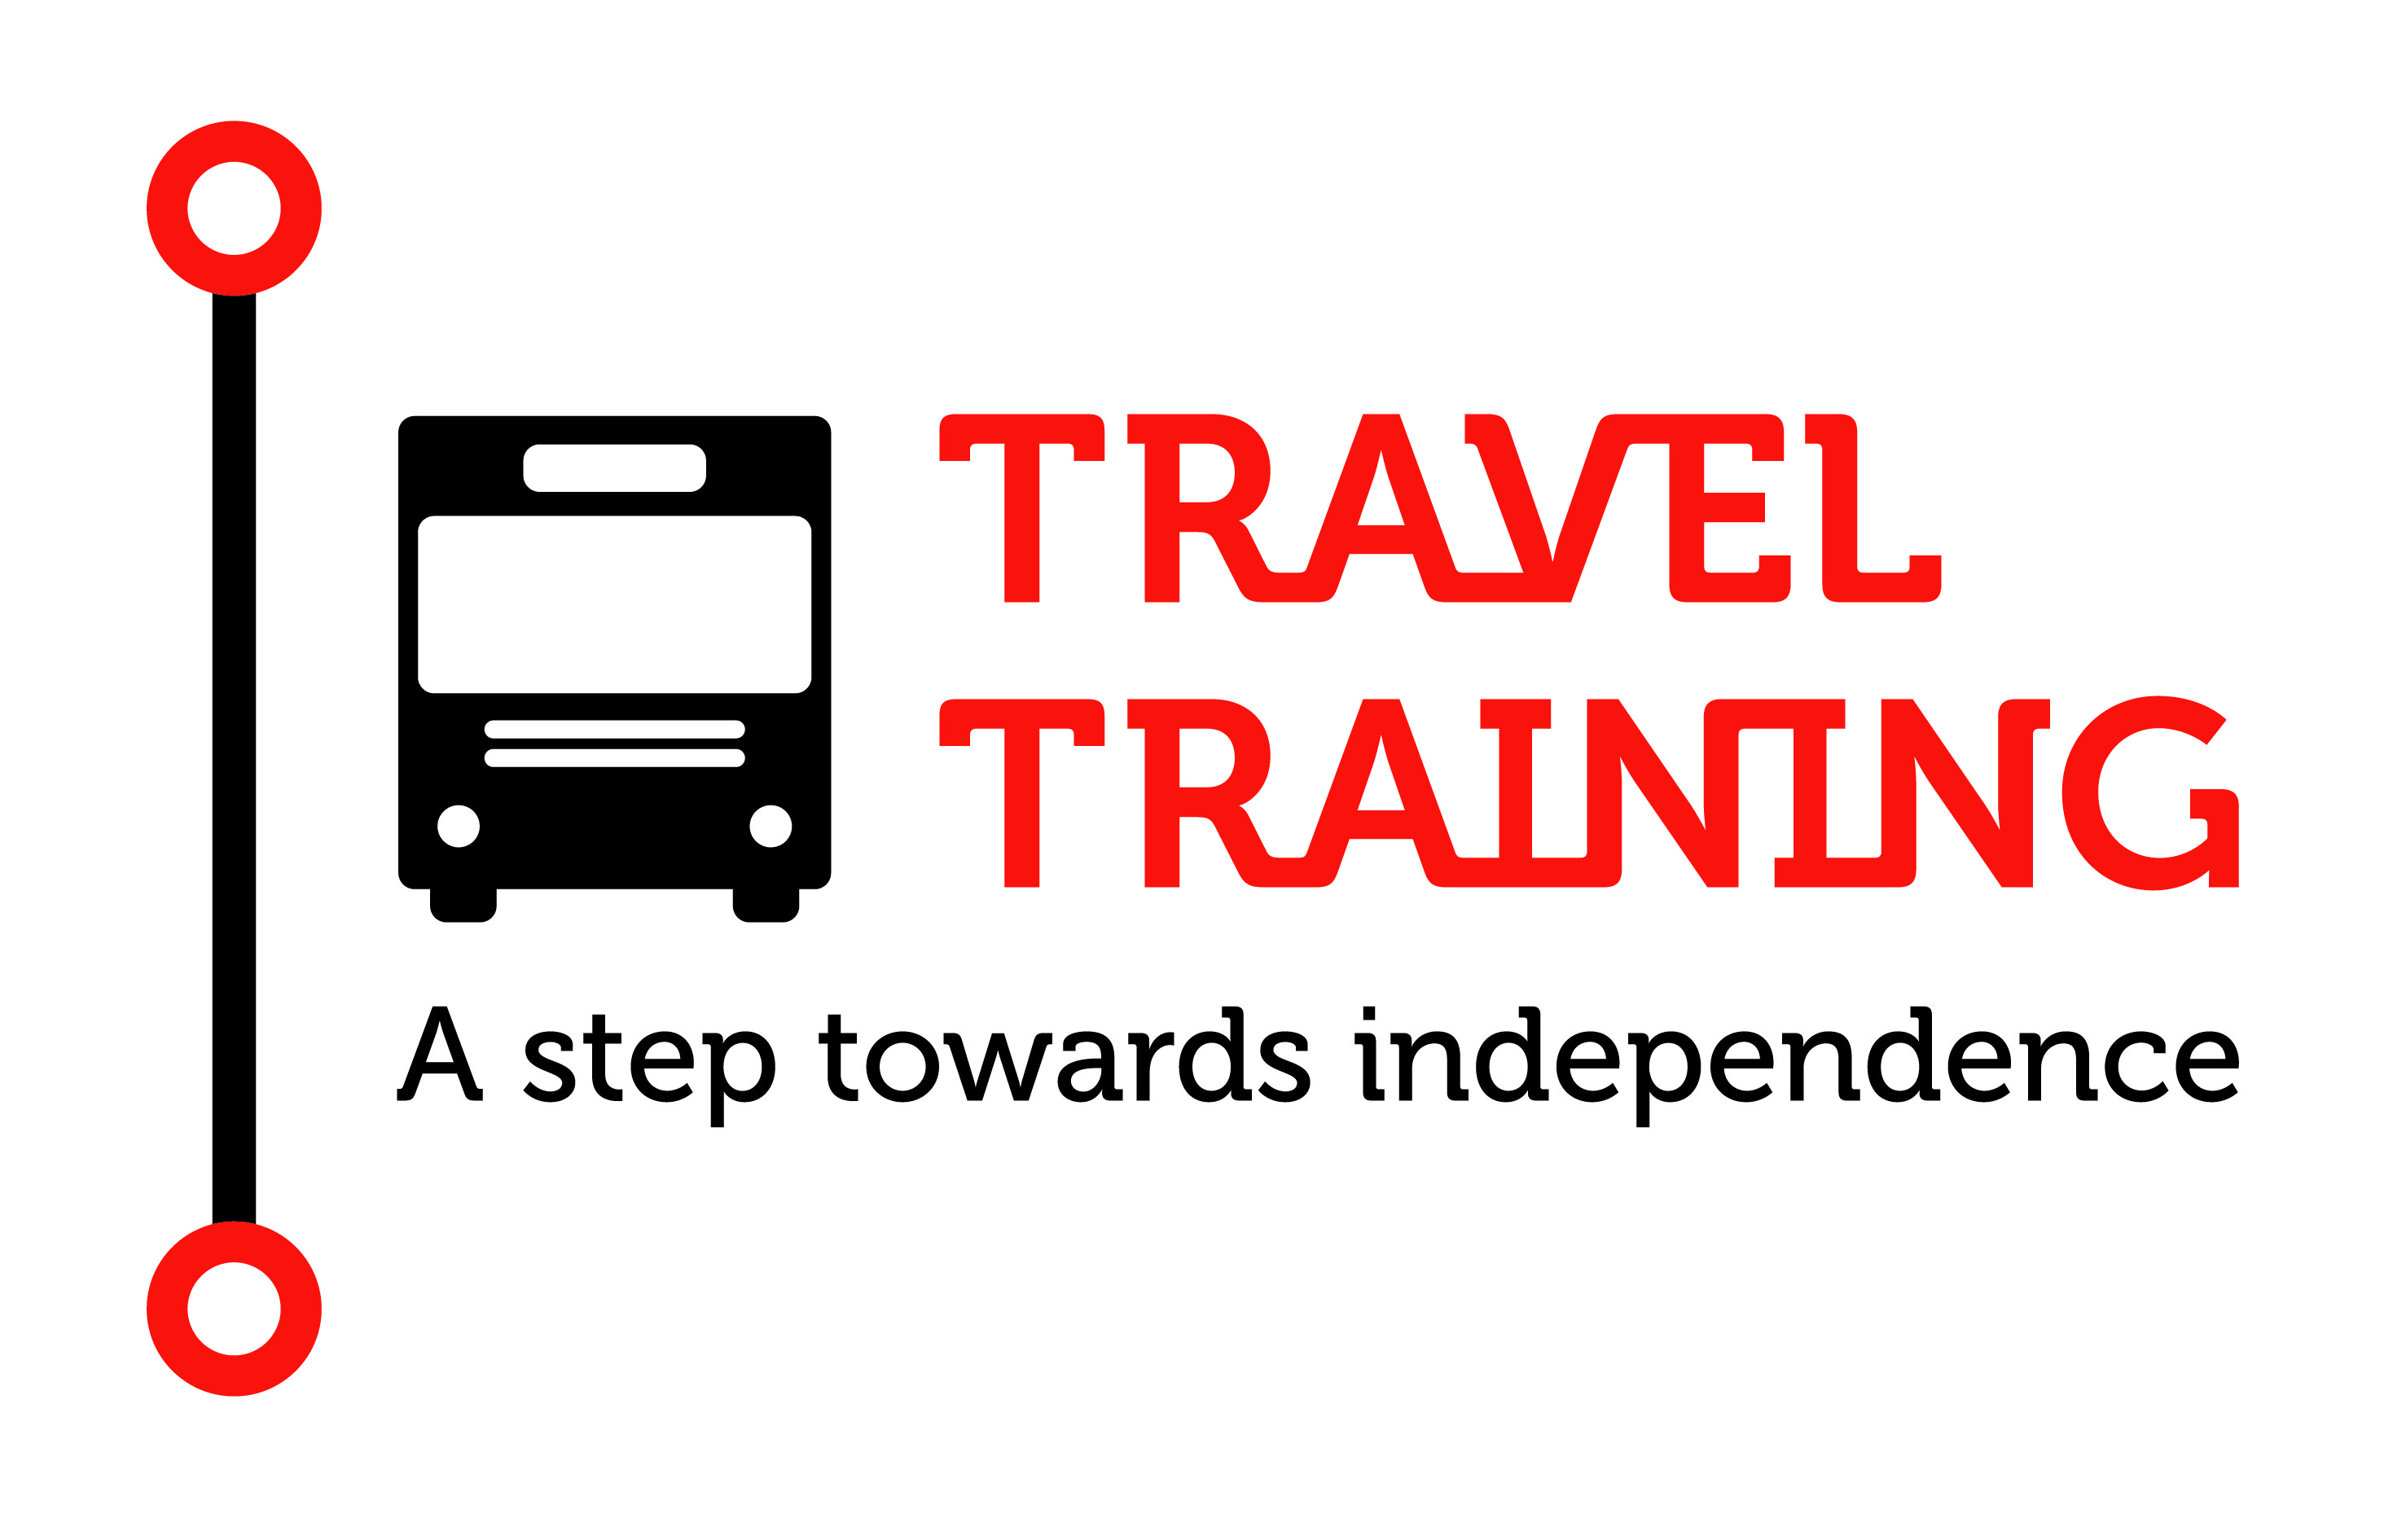 independent travel training qualification